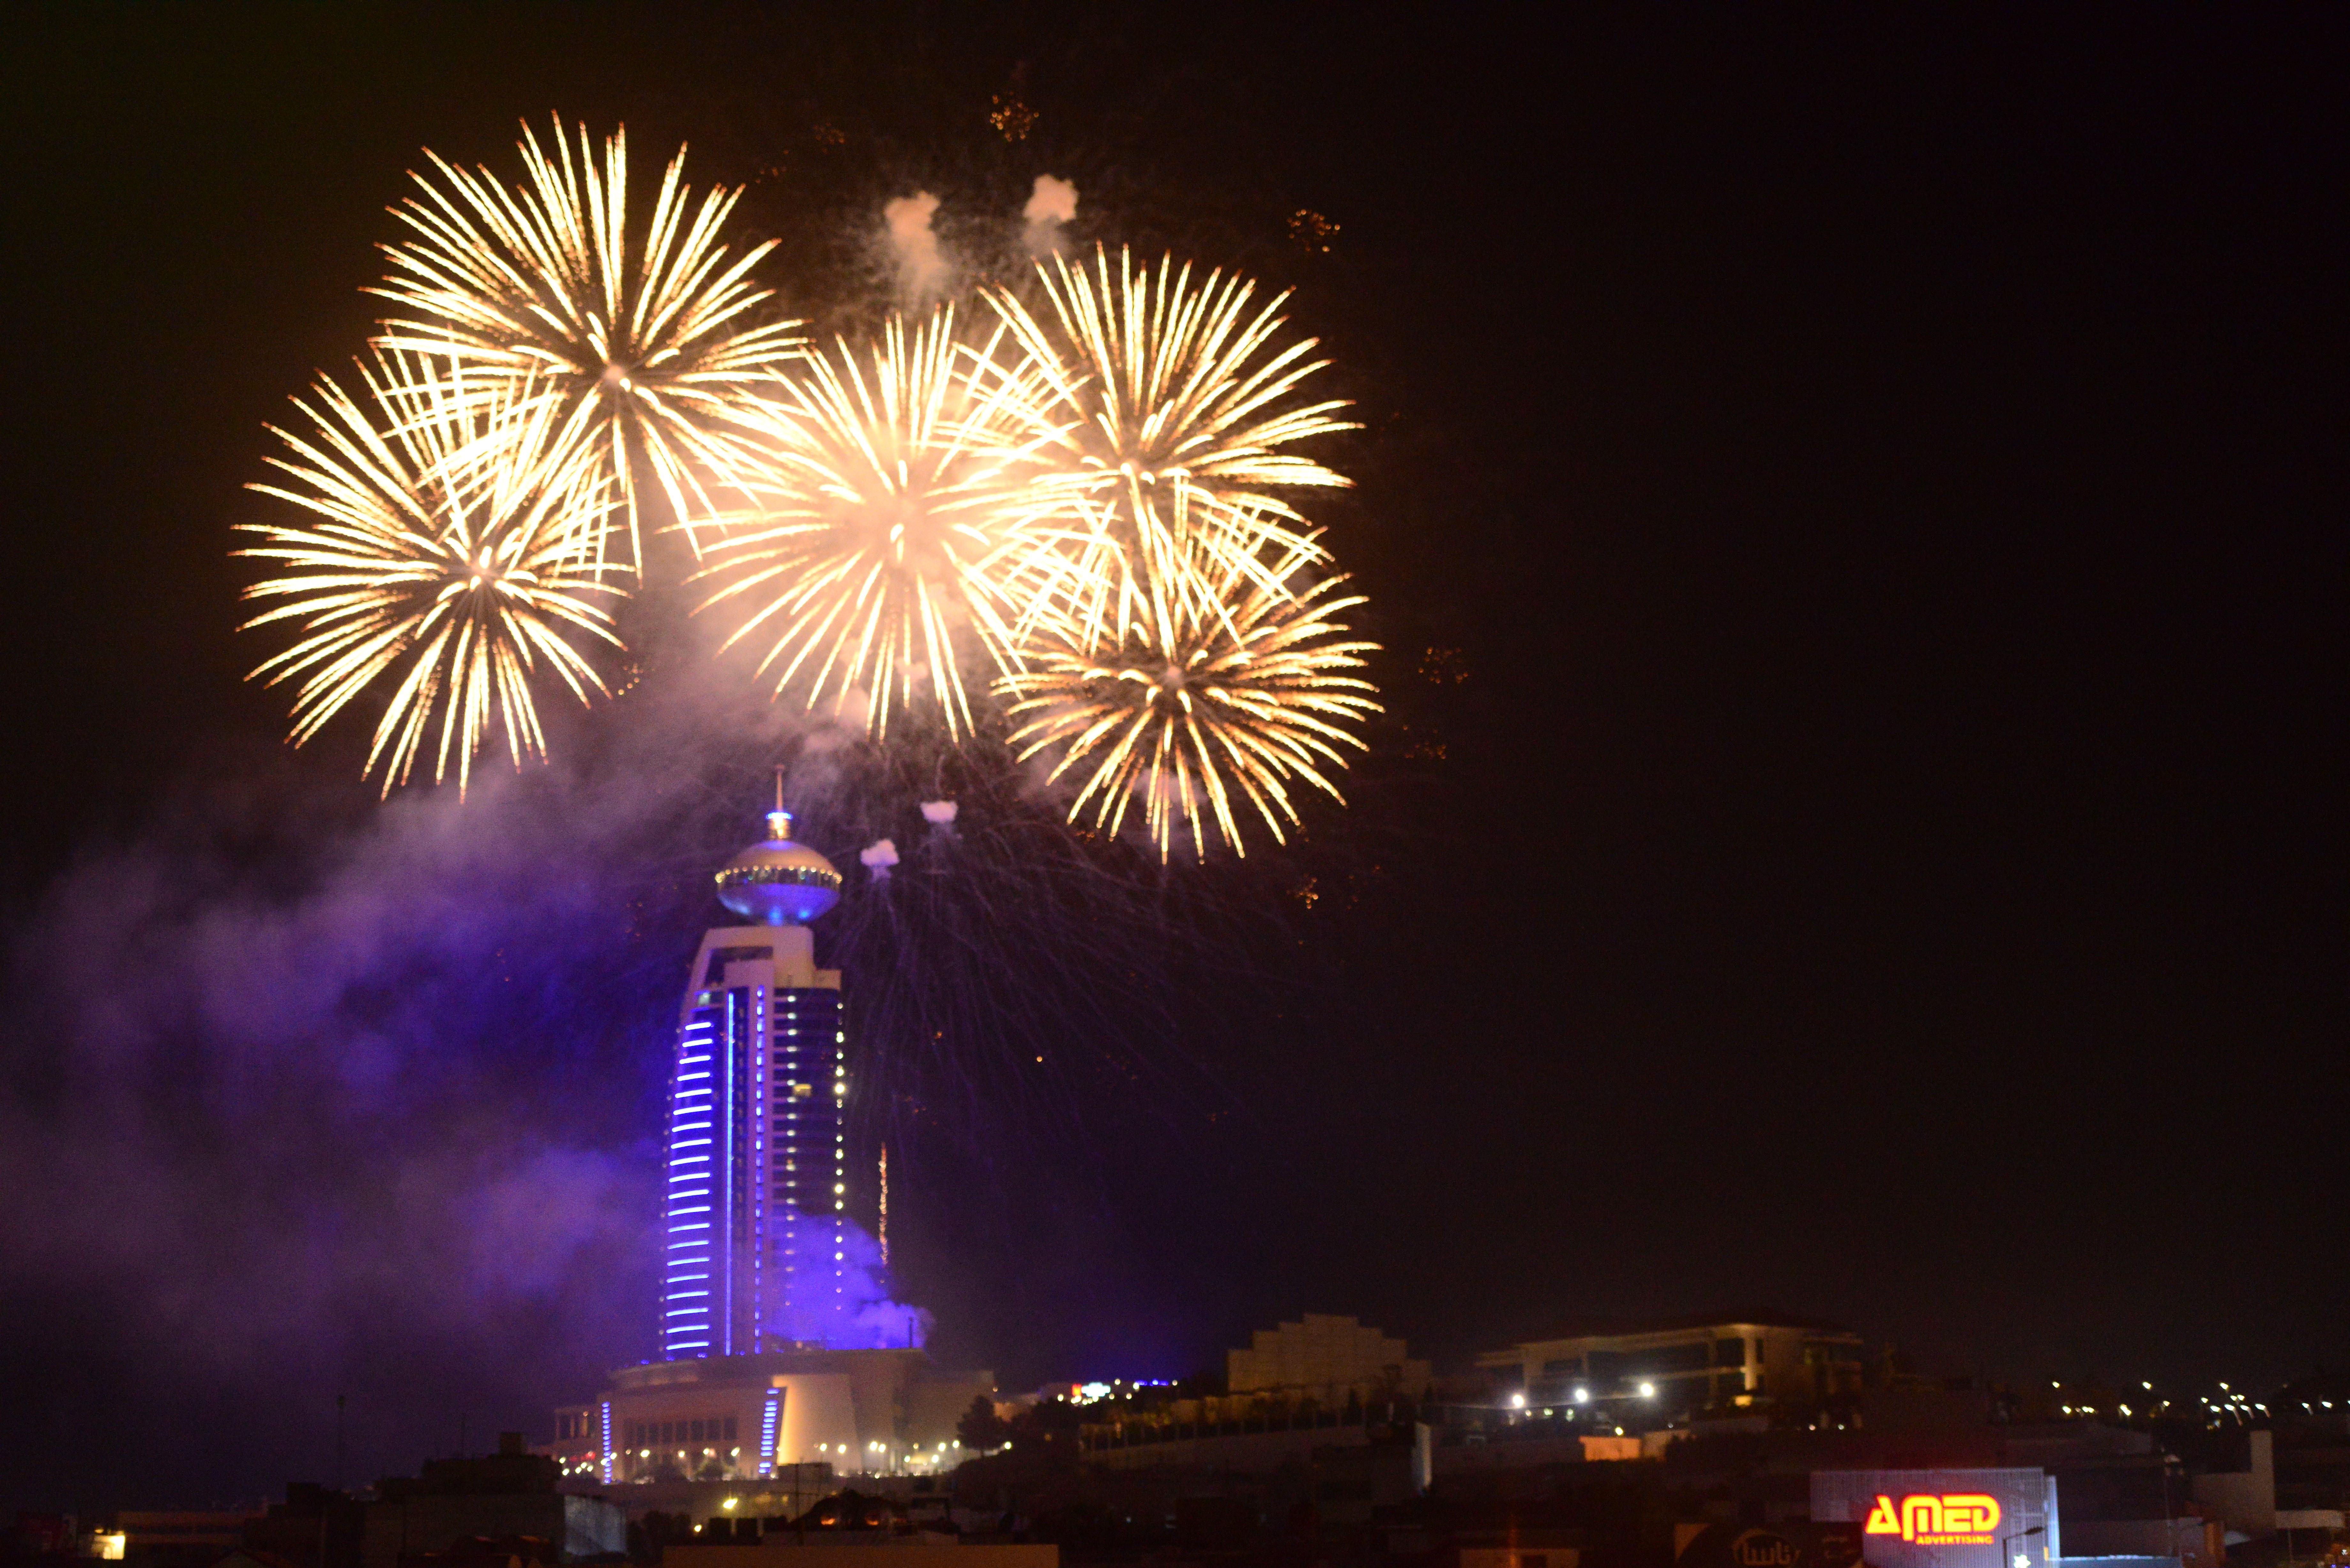  Fireworks illuminate the night sky over Sulaymaniyah, Iraq